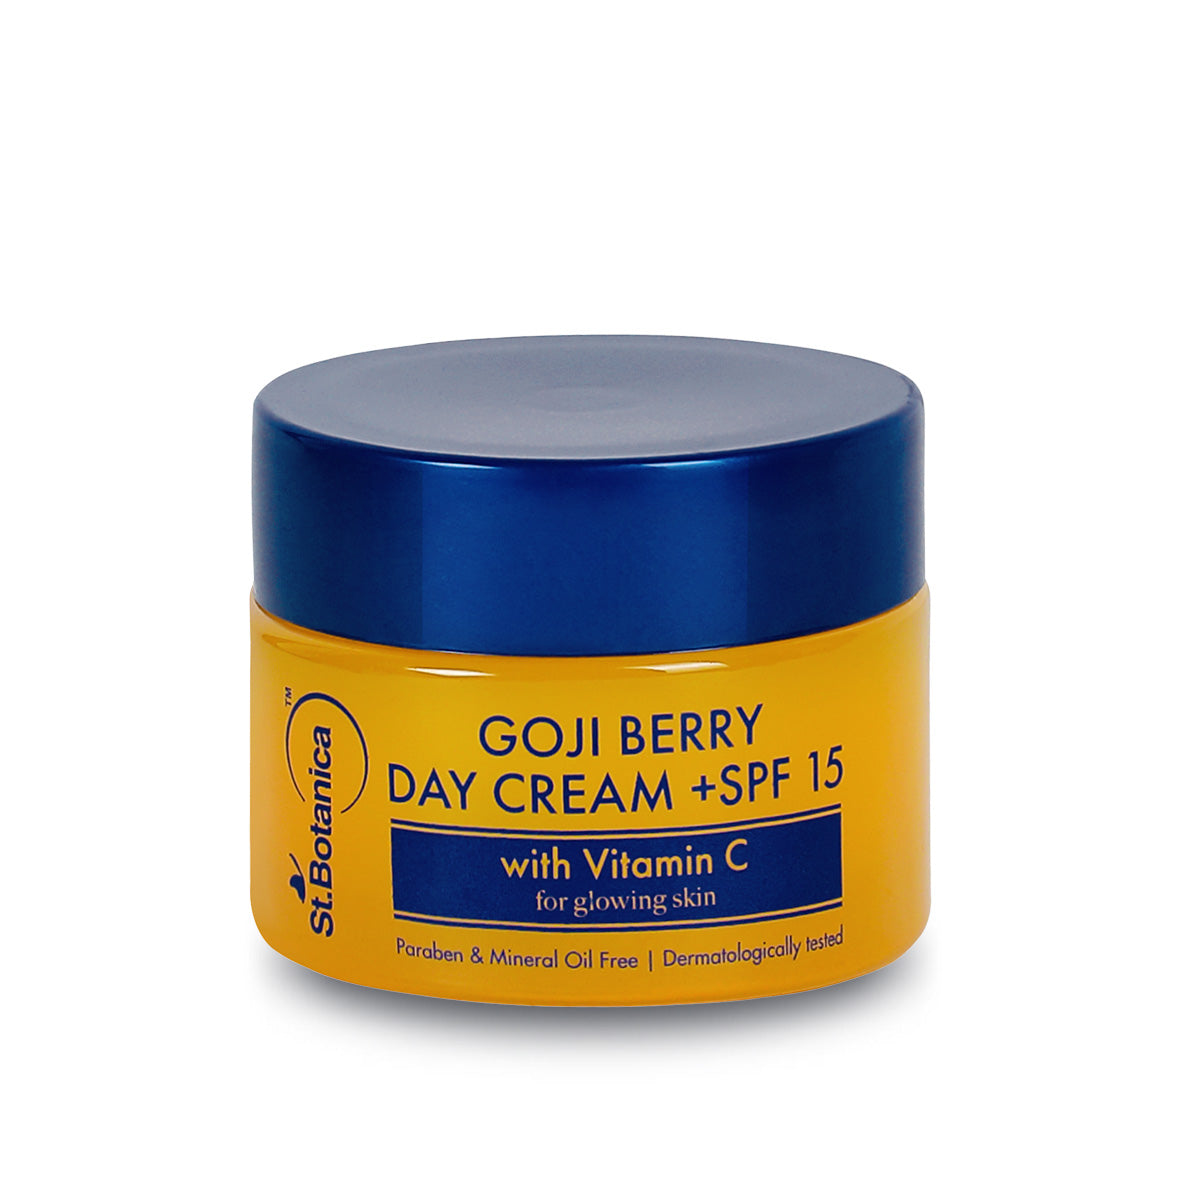 St.Botanica Goji Berry Day Cream + SPF15, 50gm with Goji Berry, 1% Vitamin C & Dragonfruit | For Bright Skin & Sun Protection | Paraben Free, Cruelty Free & Vegan